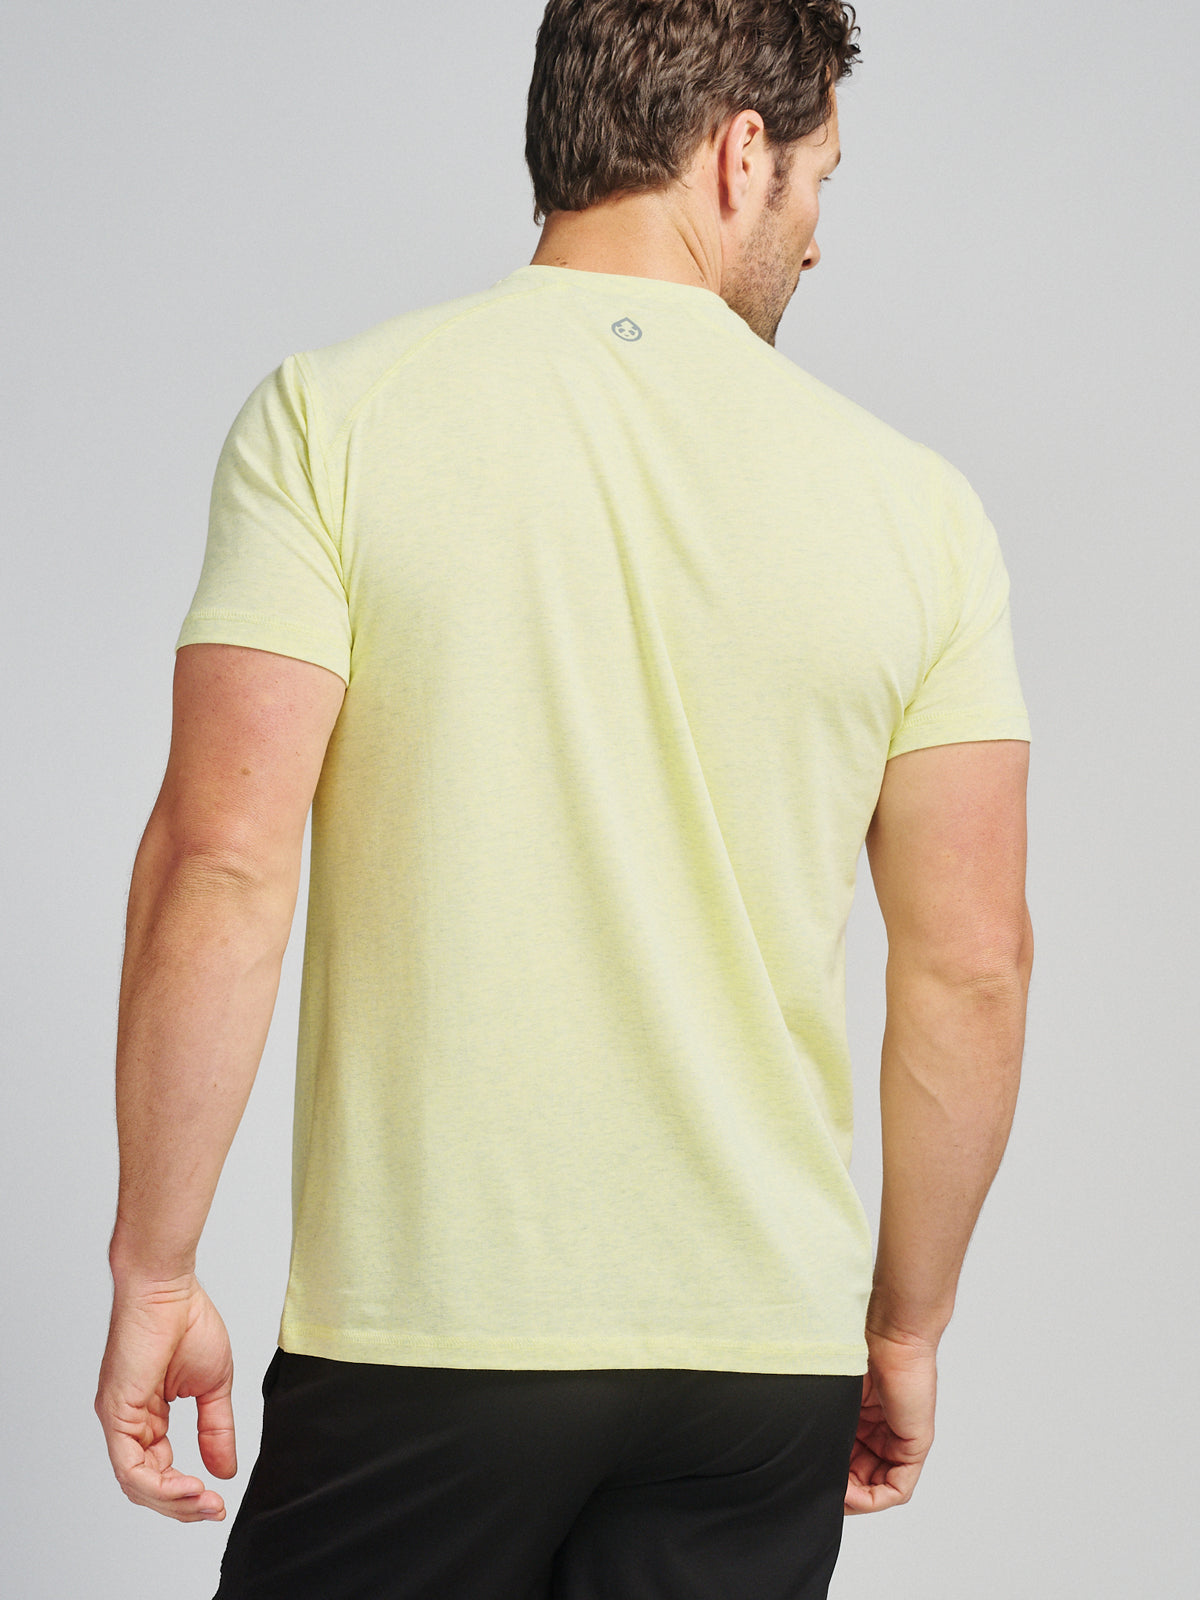 Carrollton Fitness T-Shirt - Seasonal (LimelightHeather)